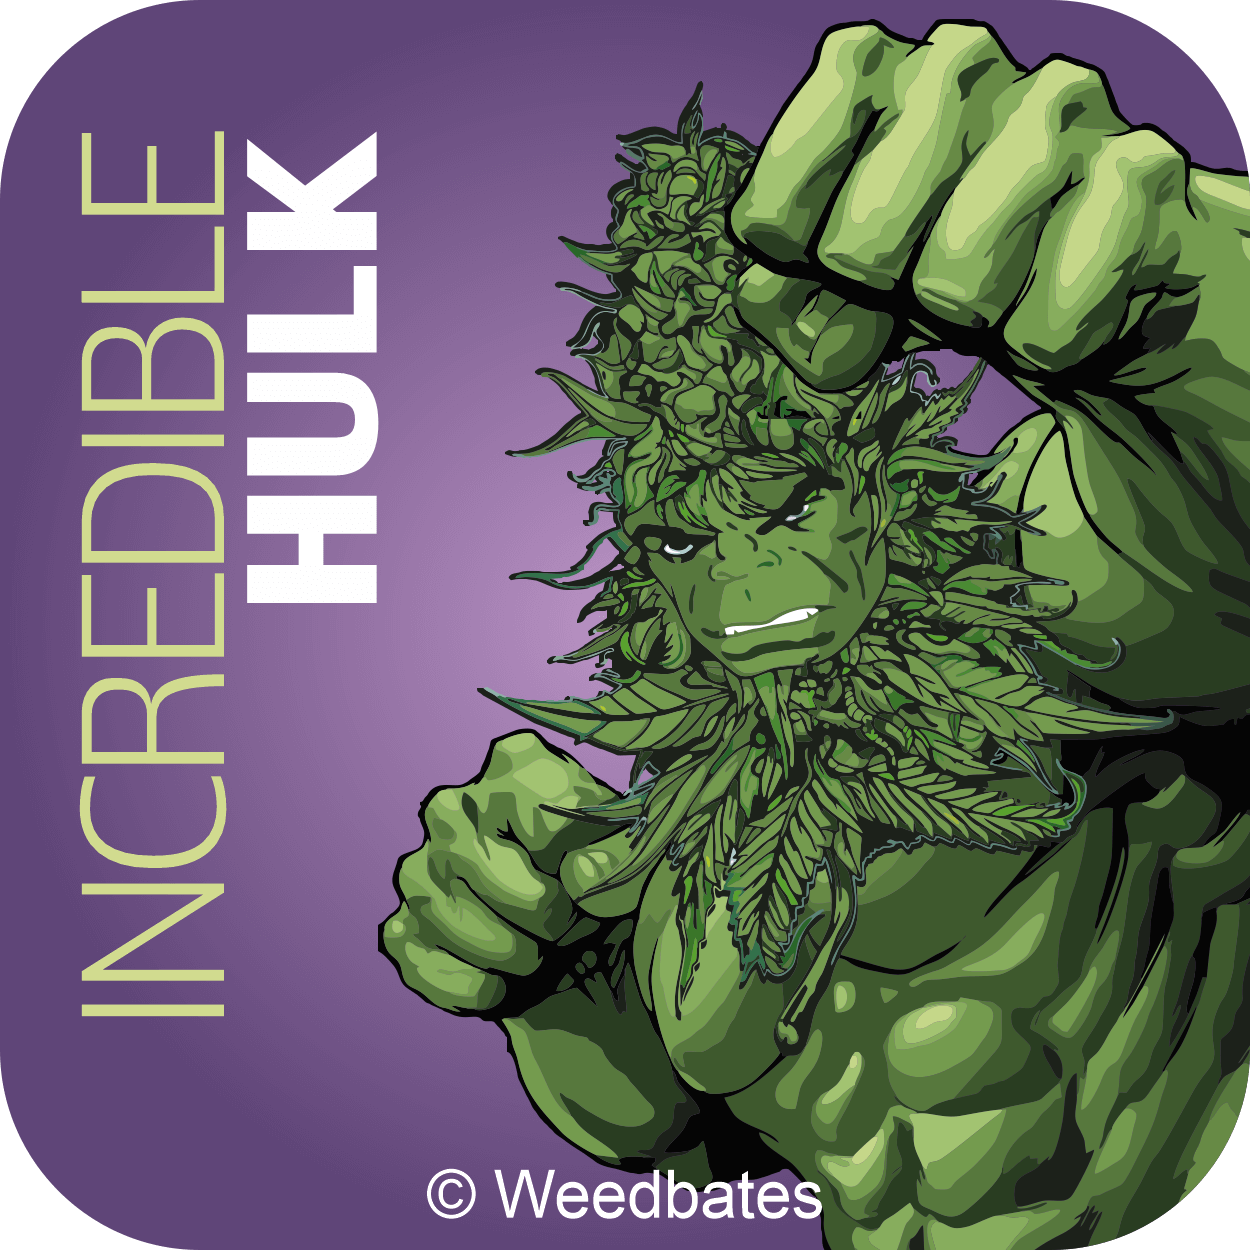 Incredible Hulk strain